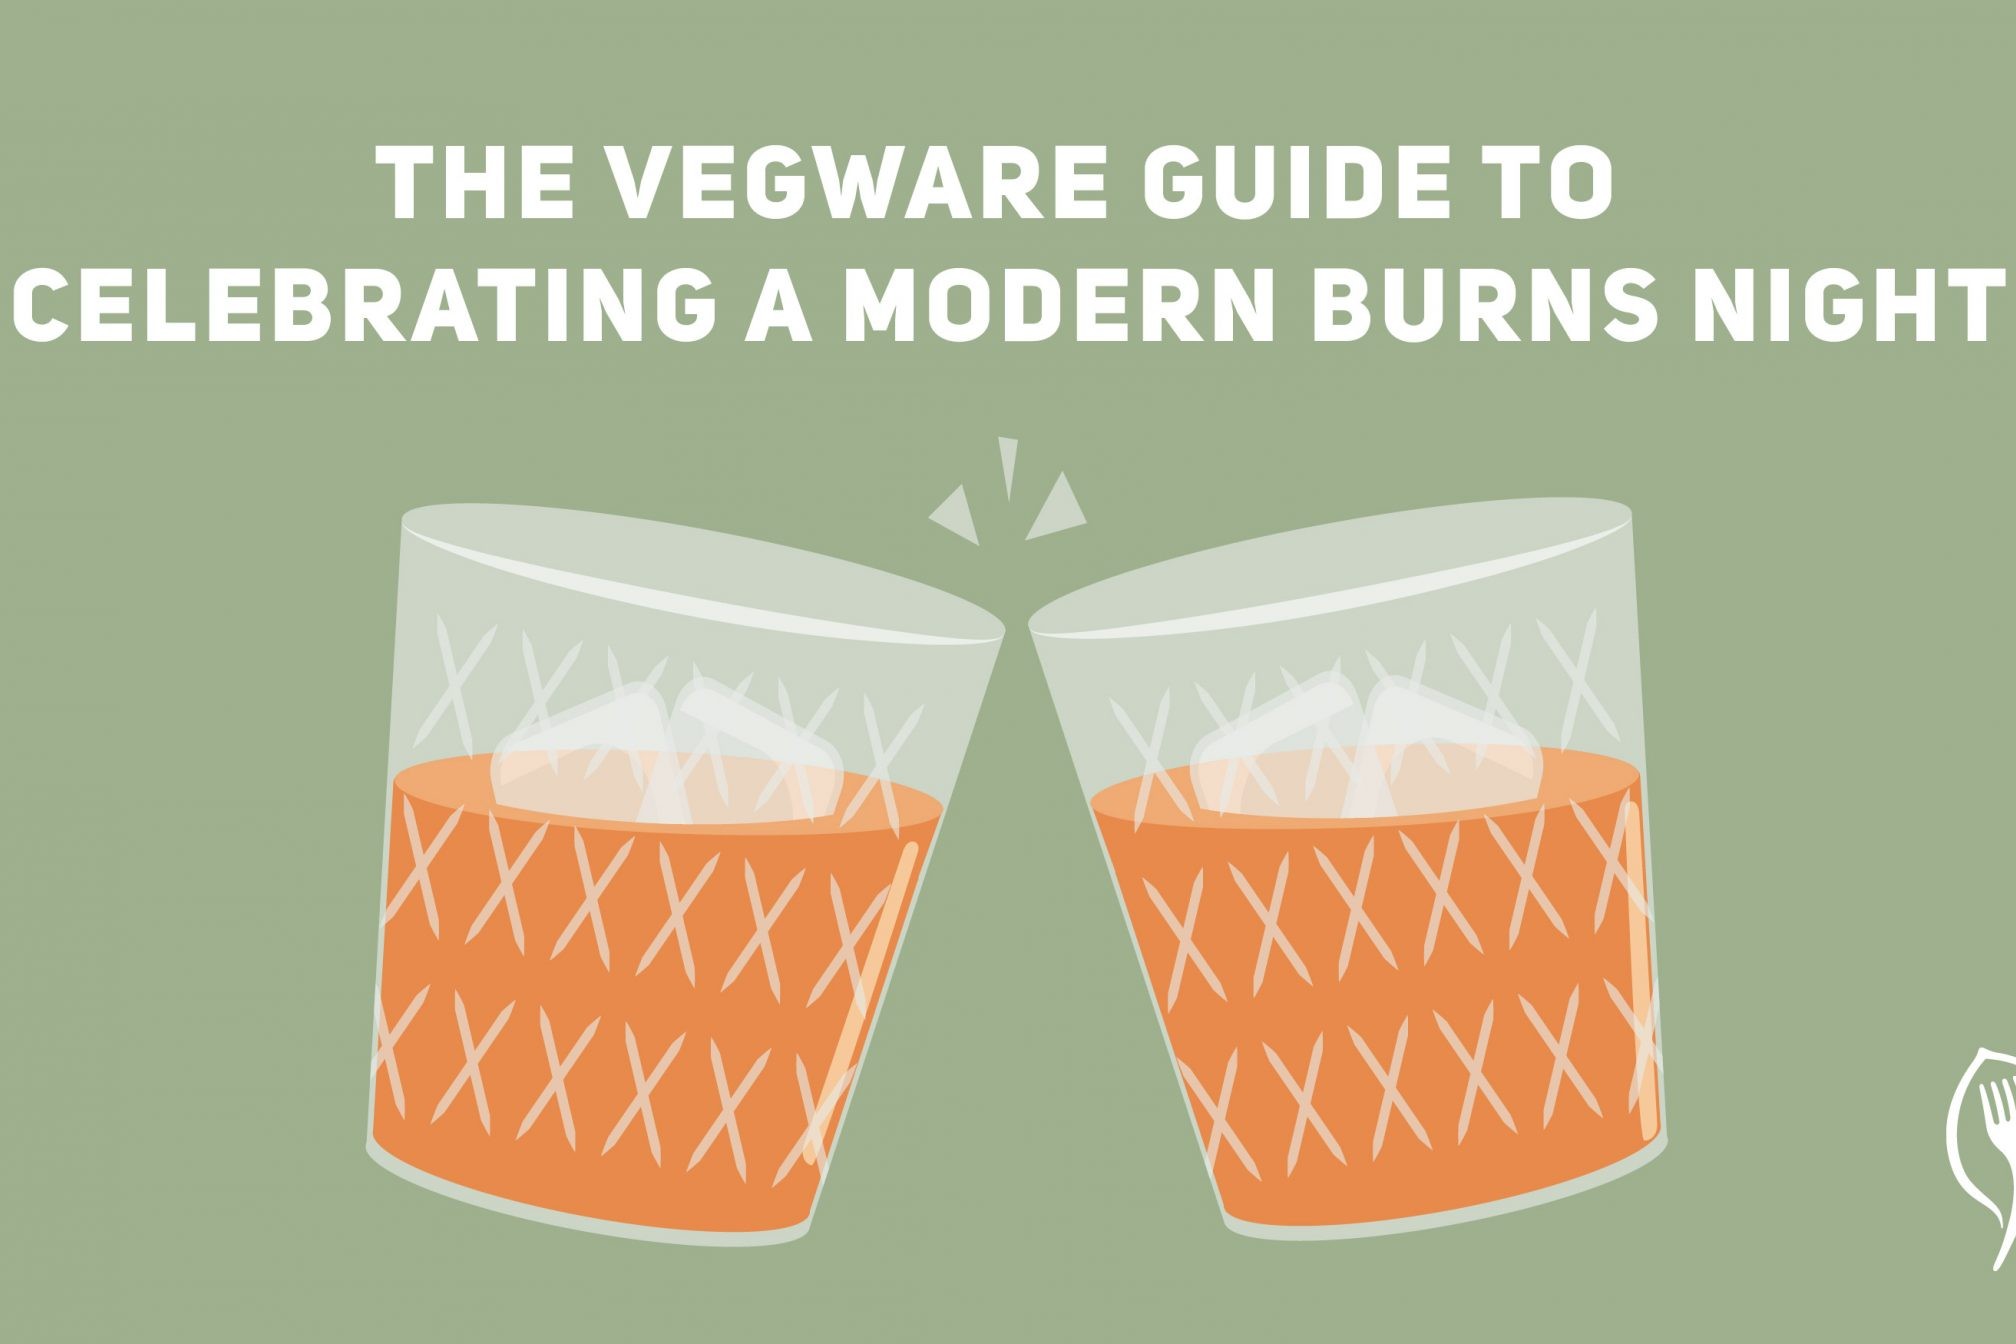 A Vegware guide to a modern Burns night